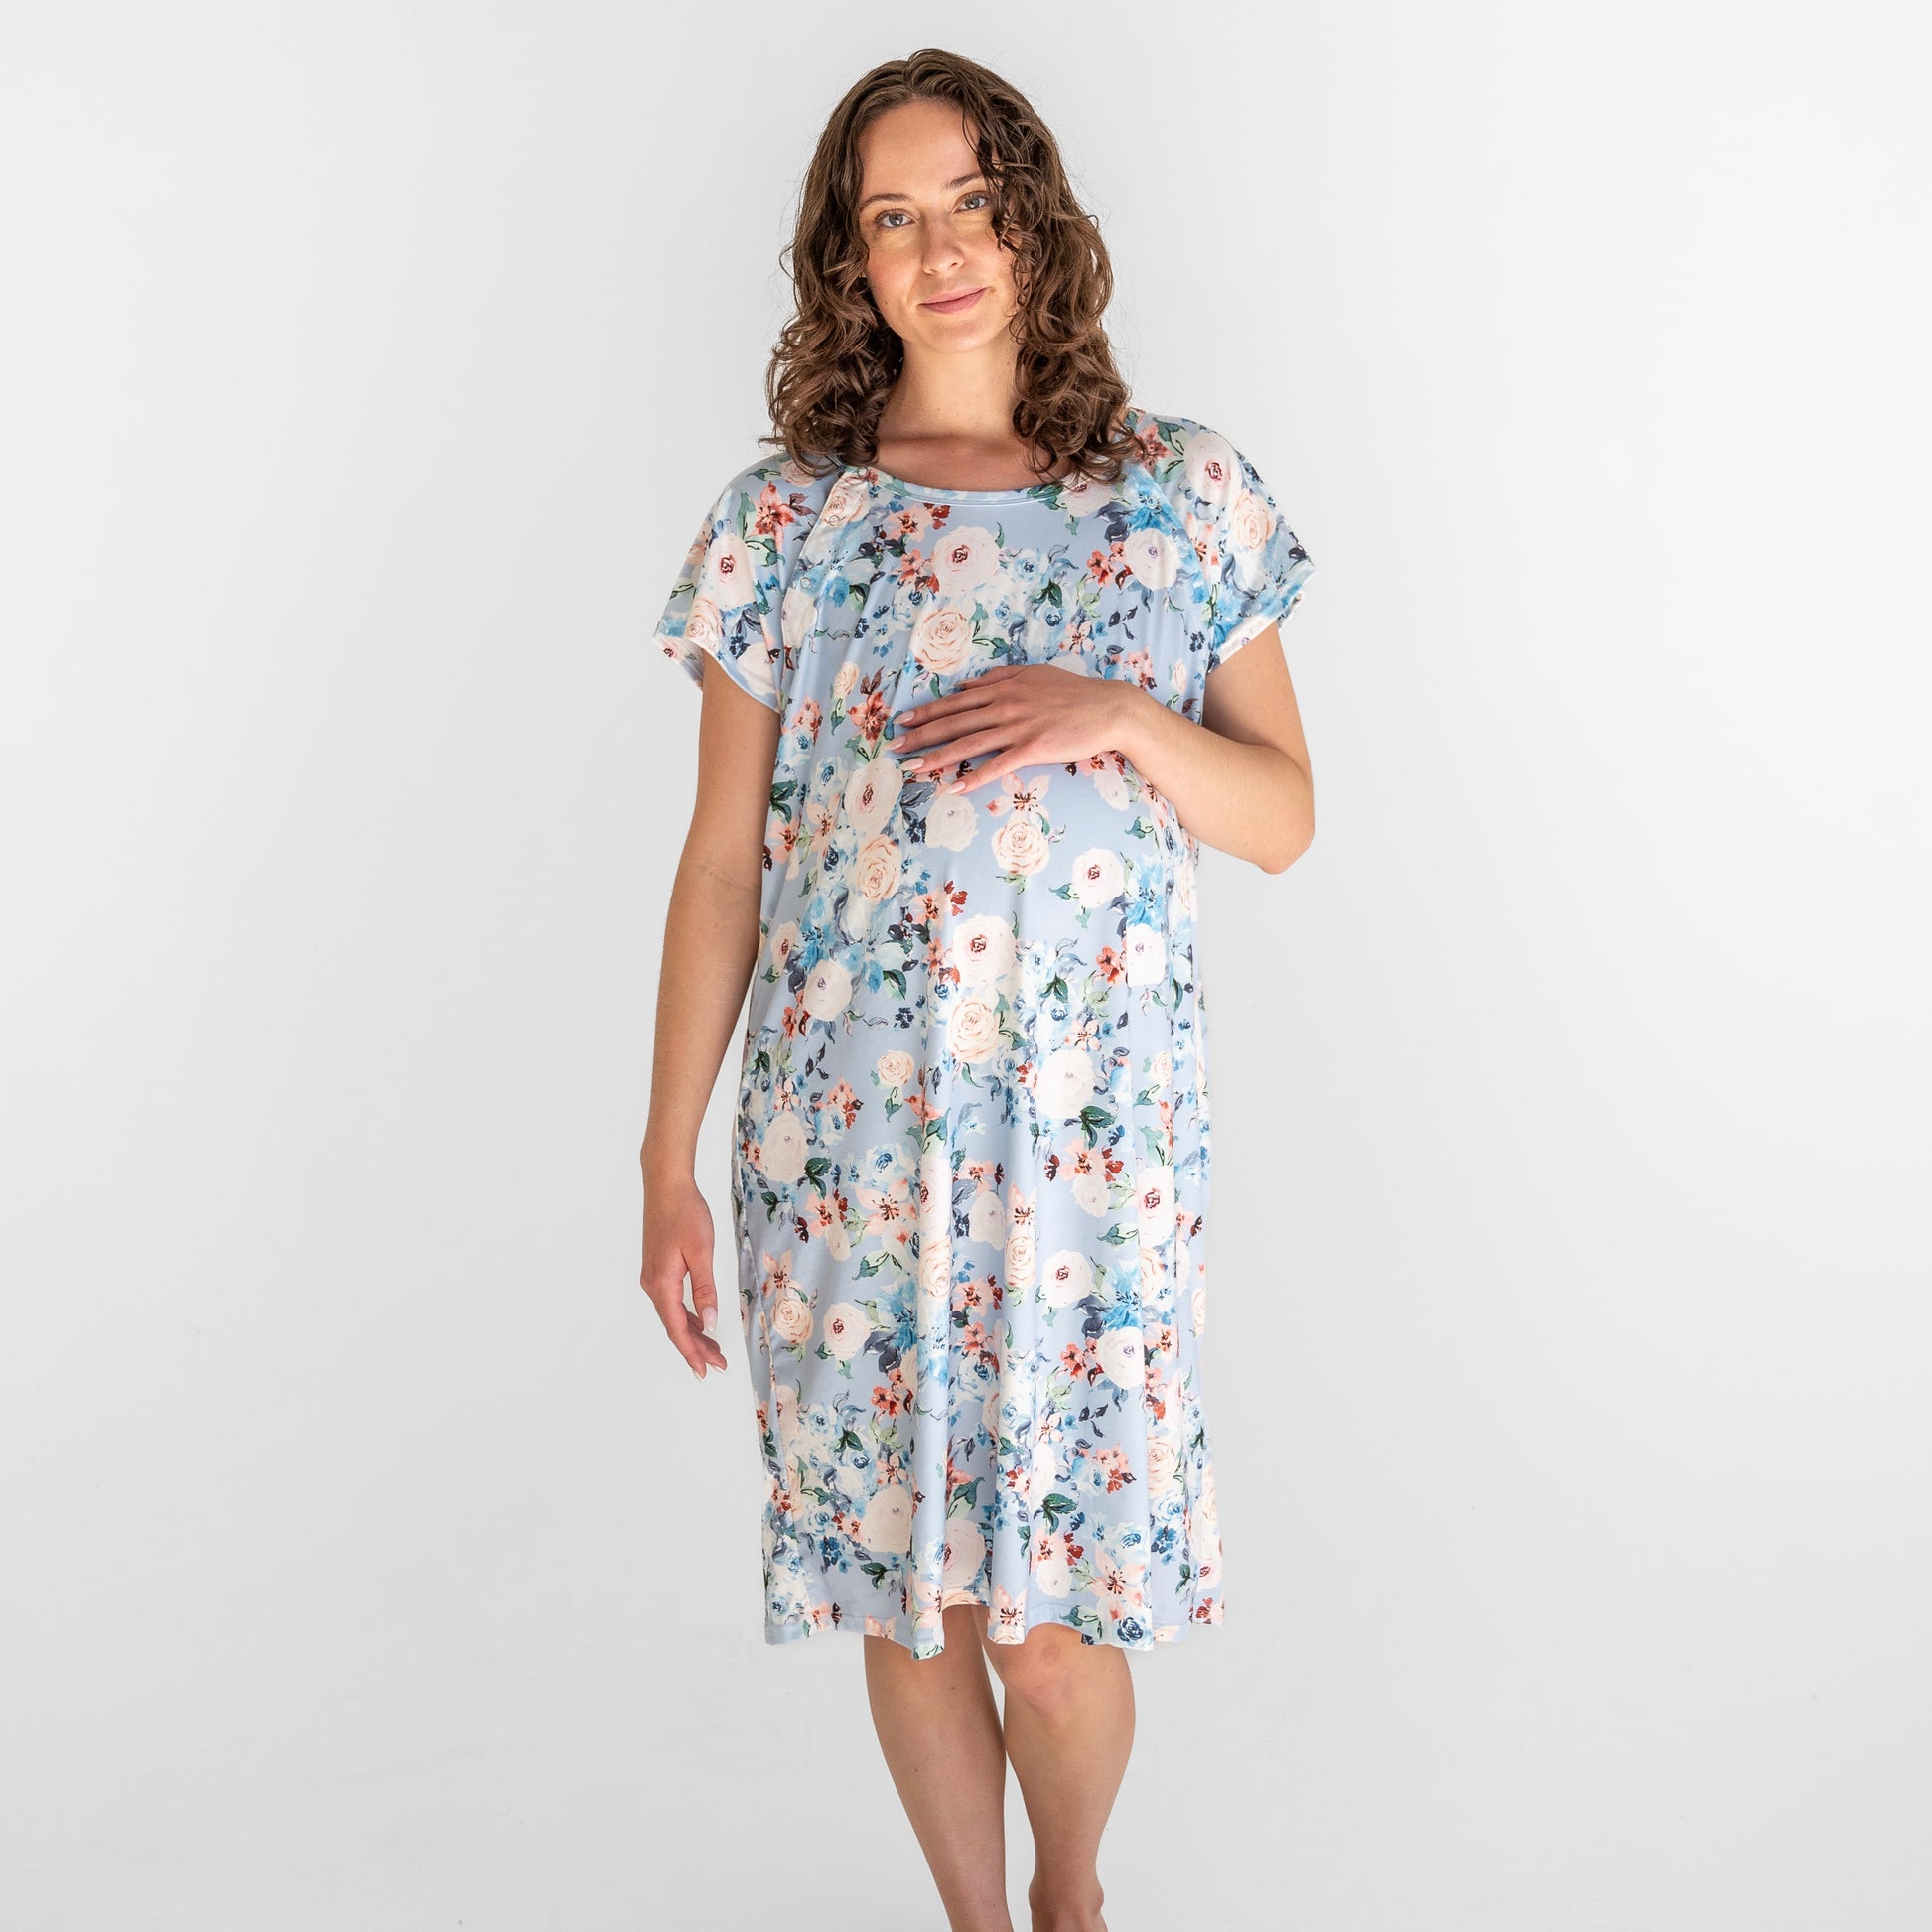 Everleigh Labor Gown – Double the Sprinkles